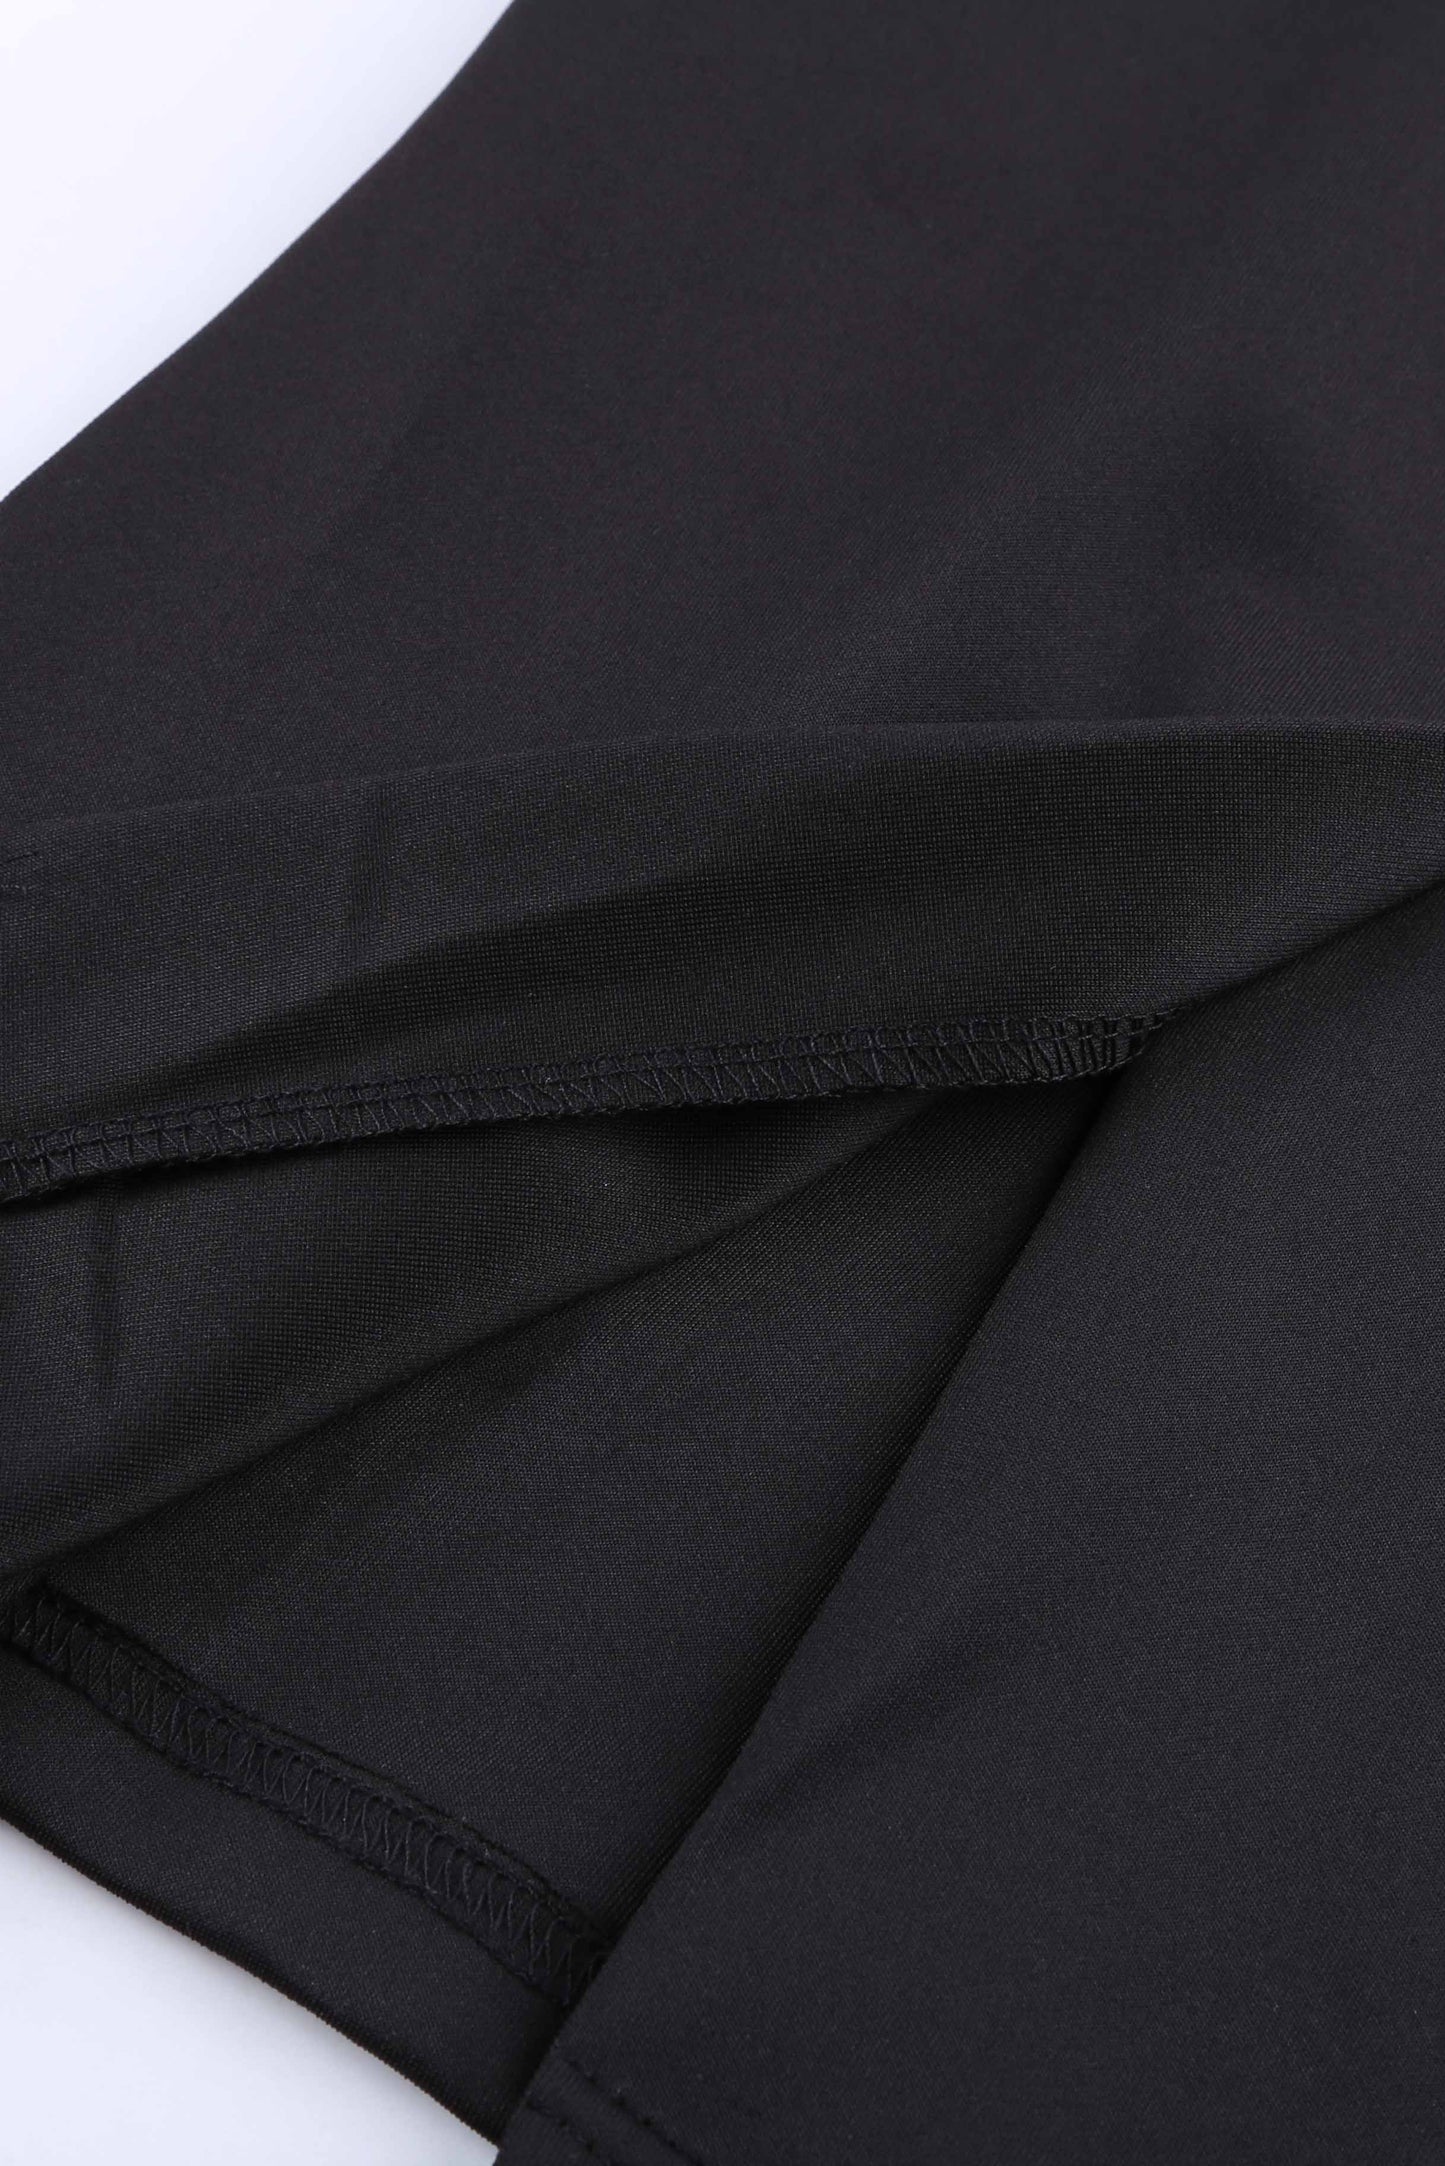 Black Off-the-shoulder Midi Dress Midi Dresses JT's Designer Fashion